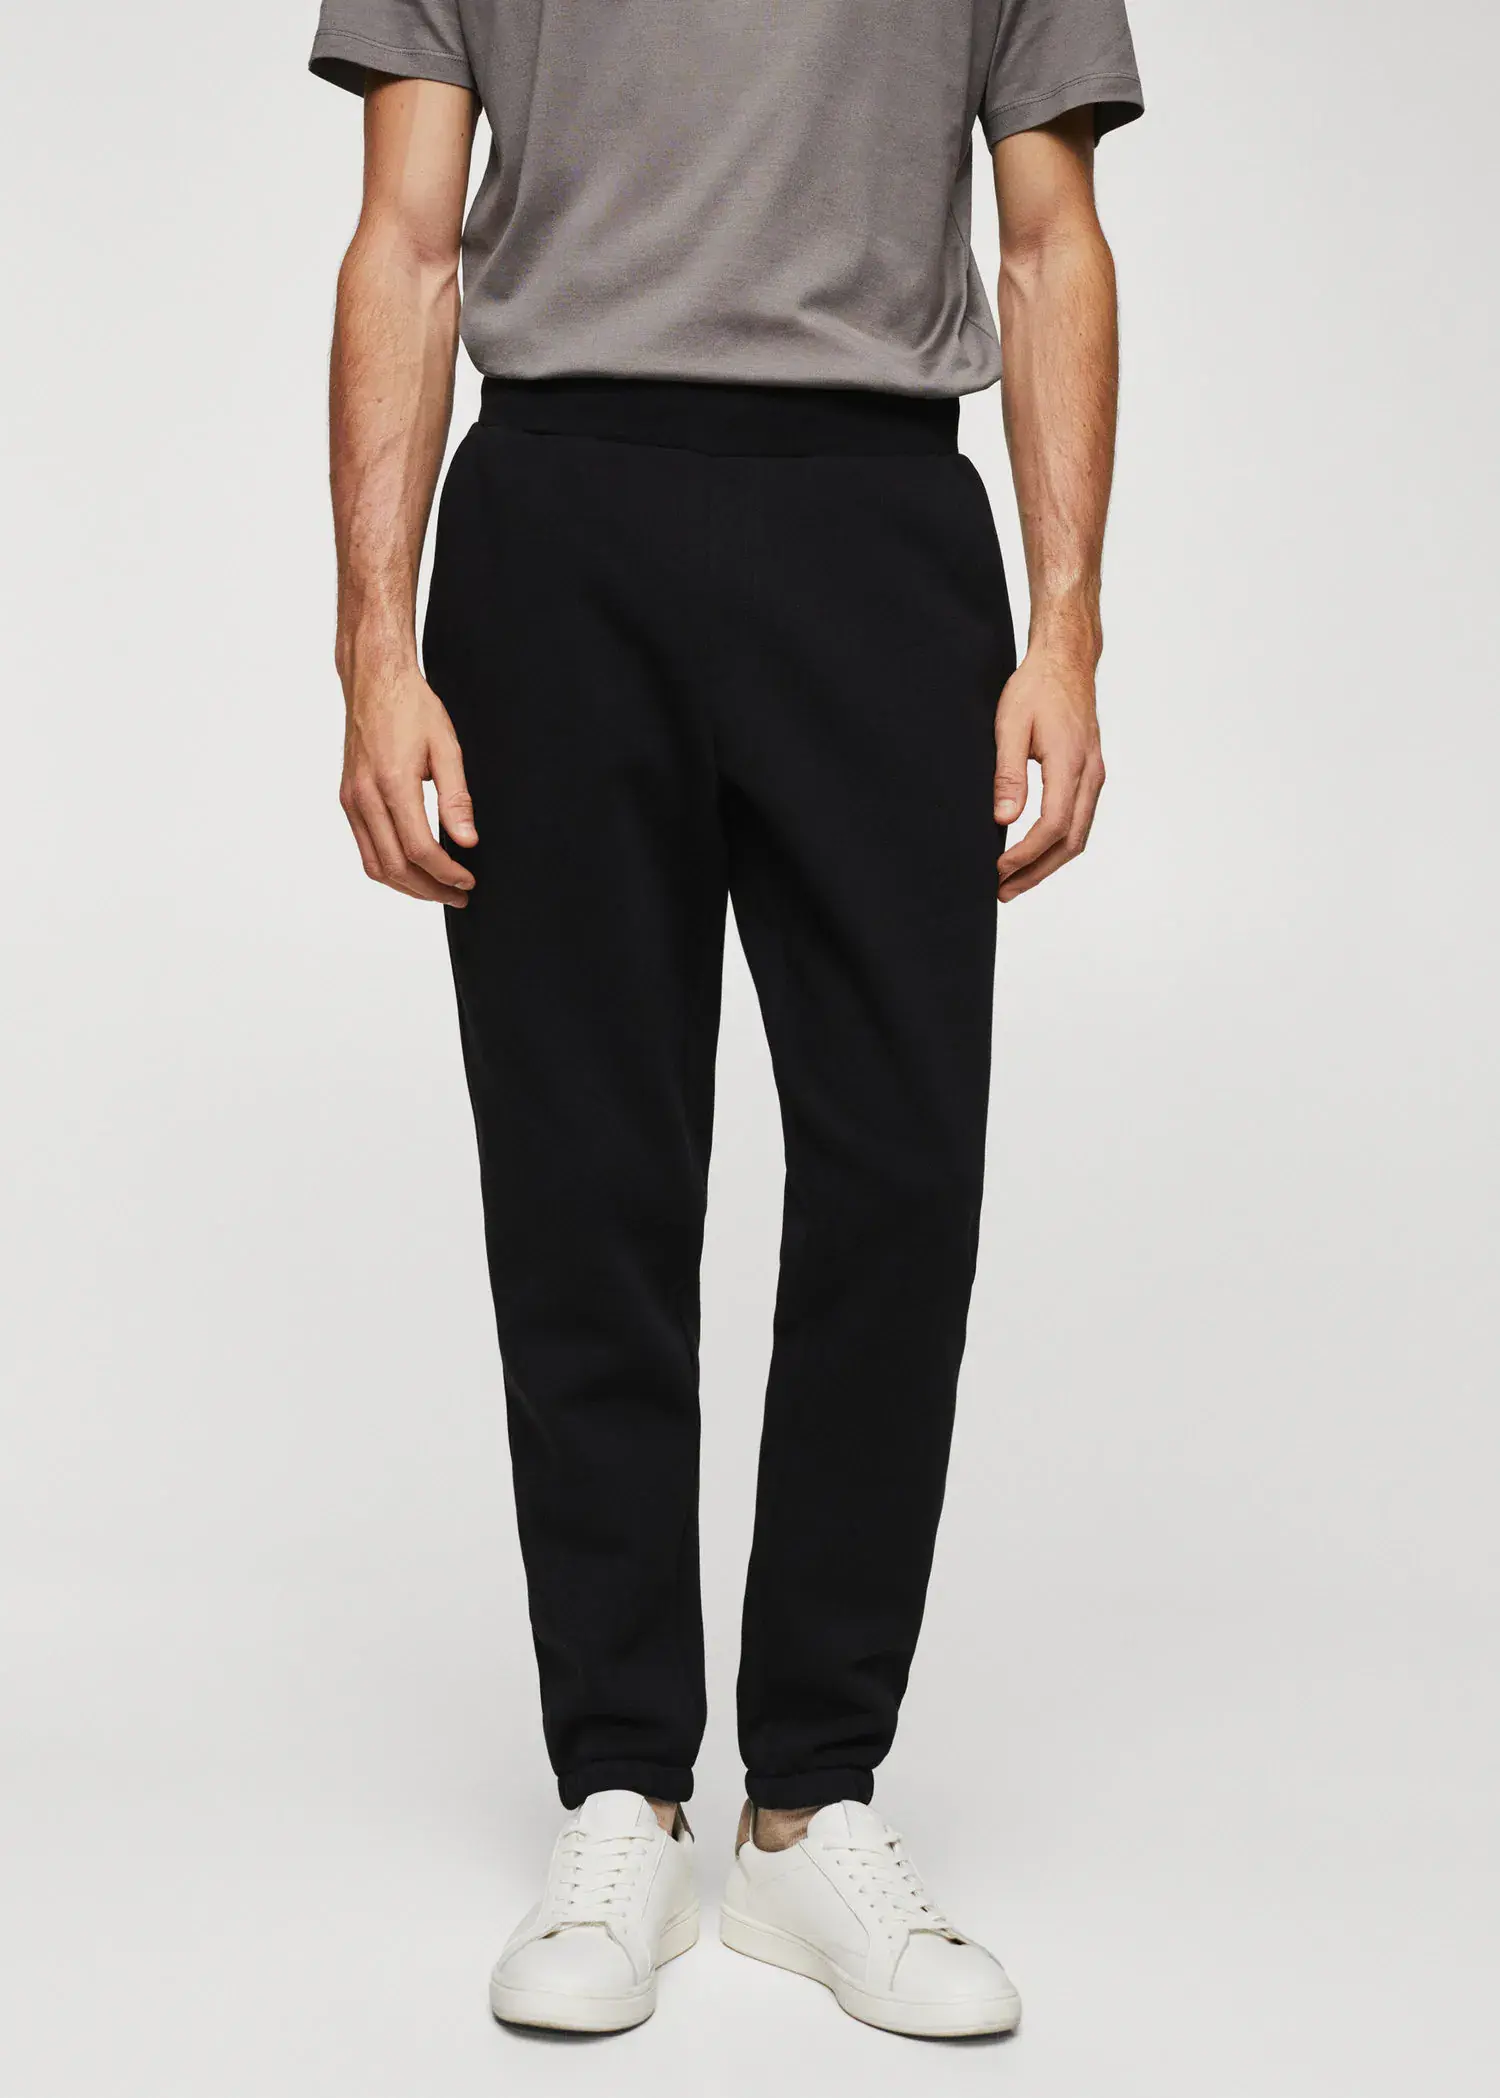 Mango Cotton jogger-style trousers. 2